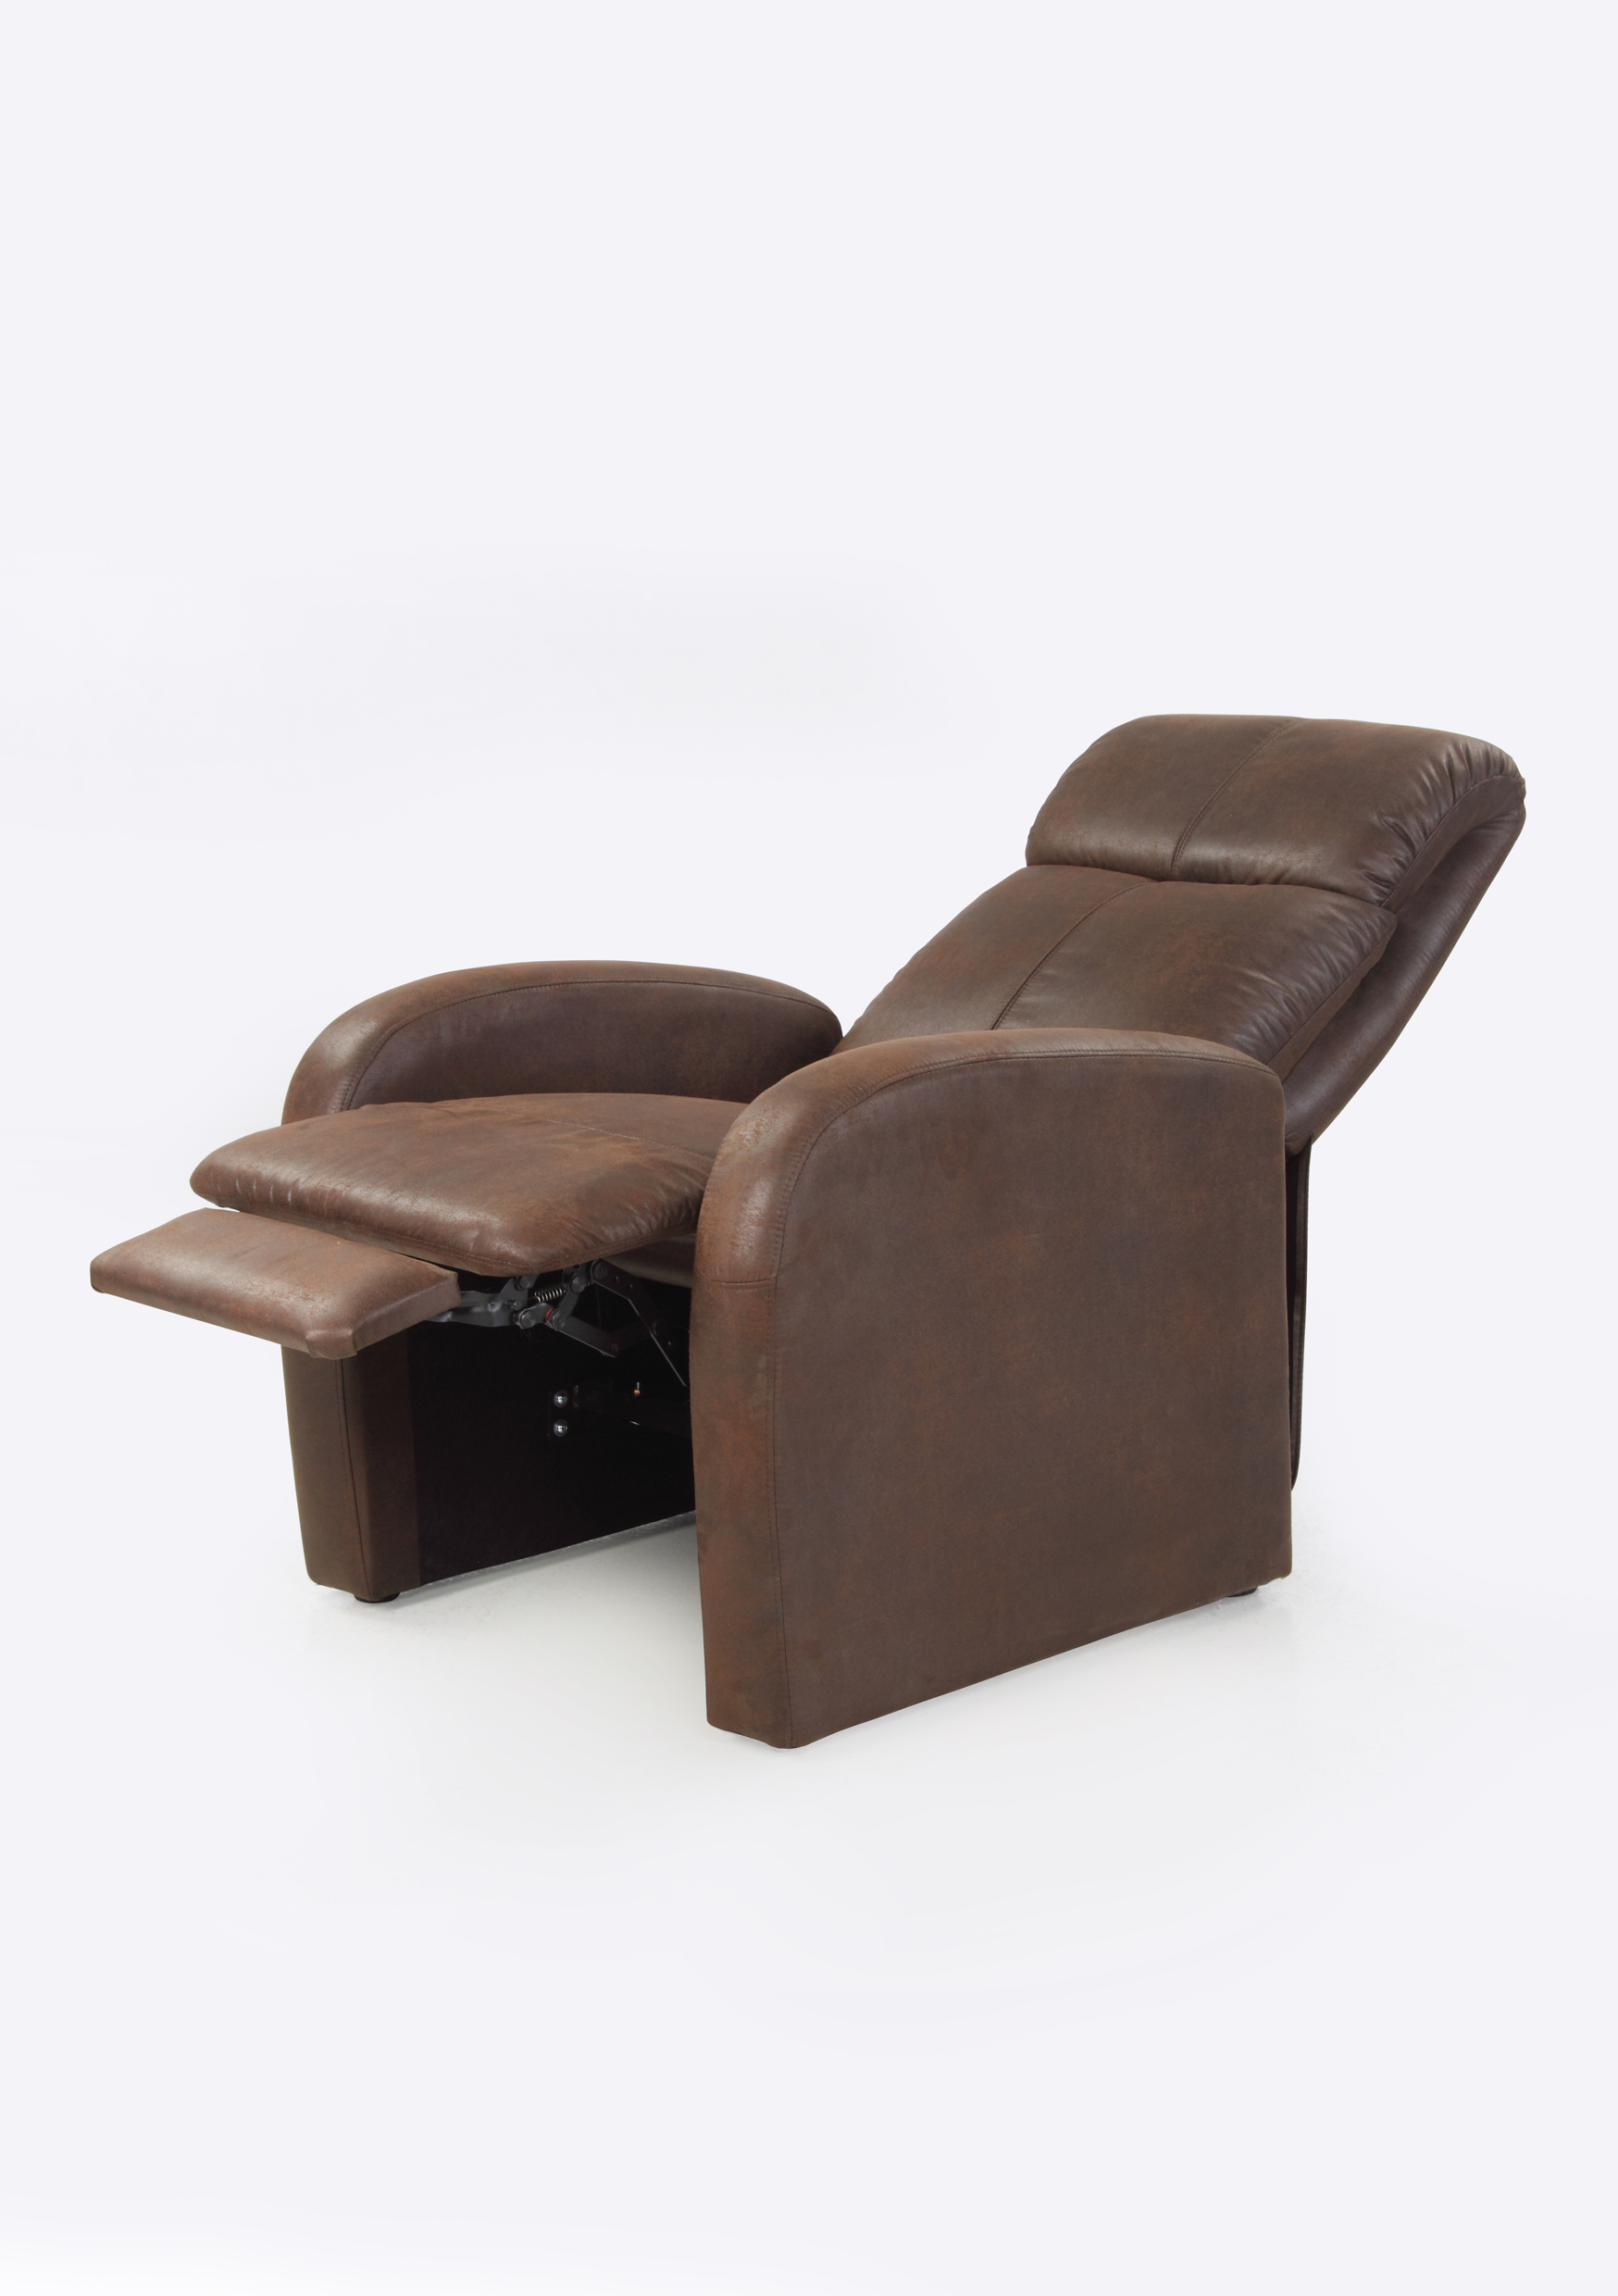 Werk manuális relax fotel, barna szövet